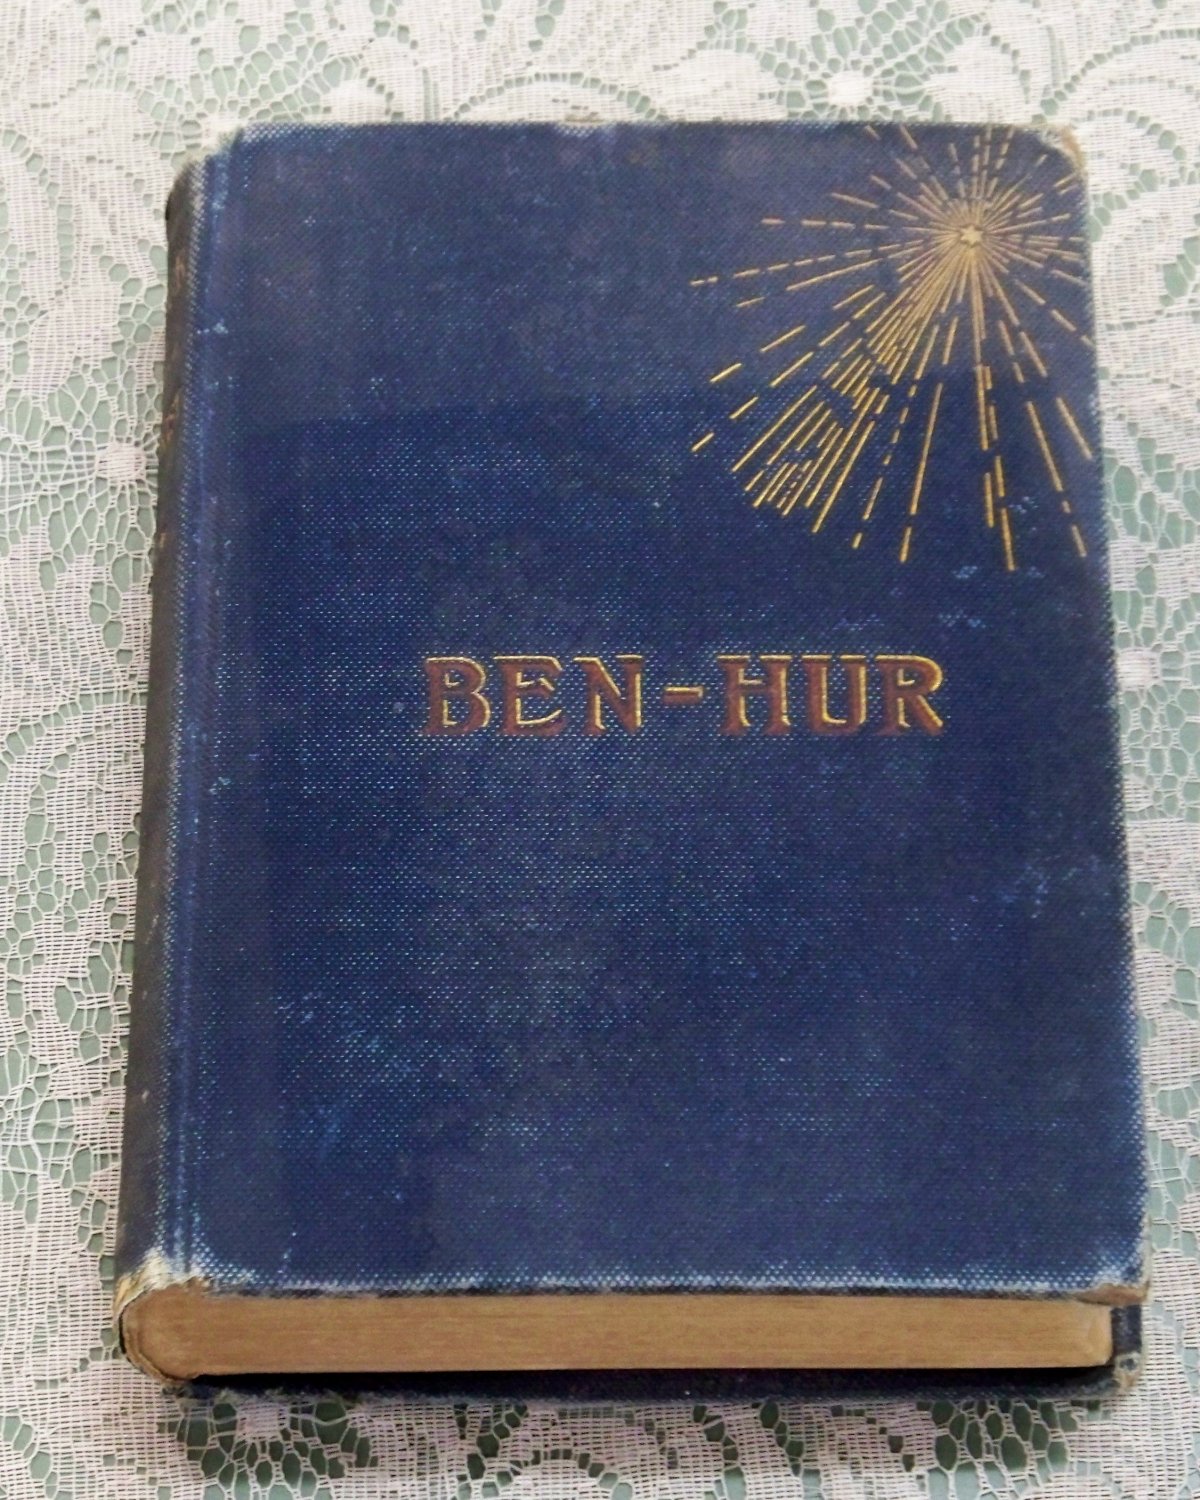 ben hur book 1880